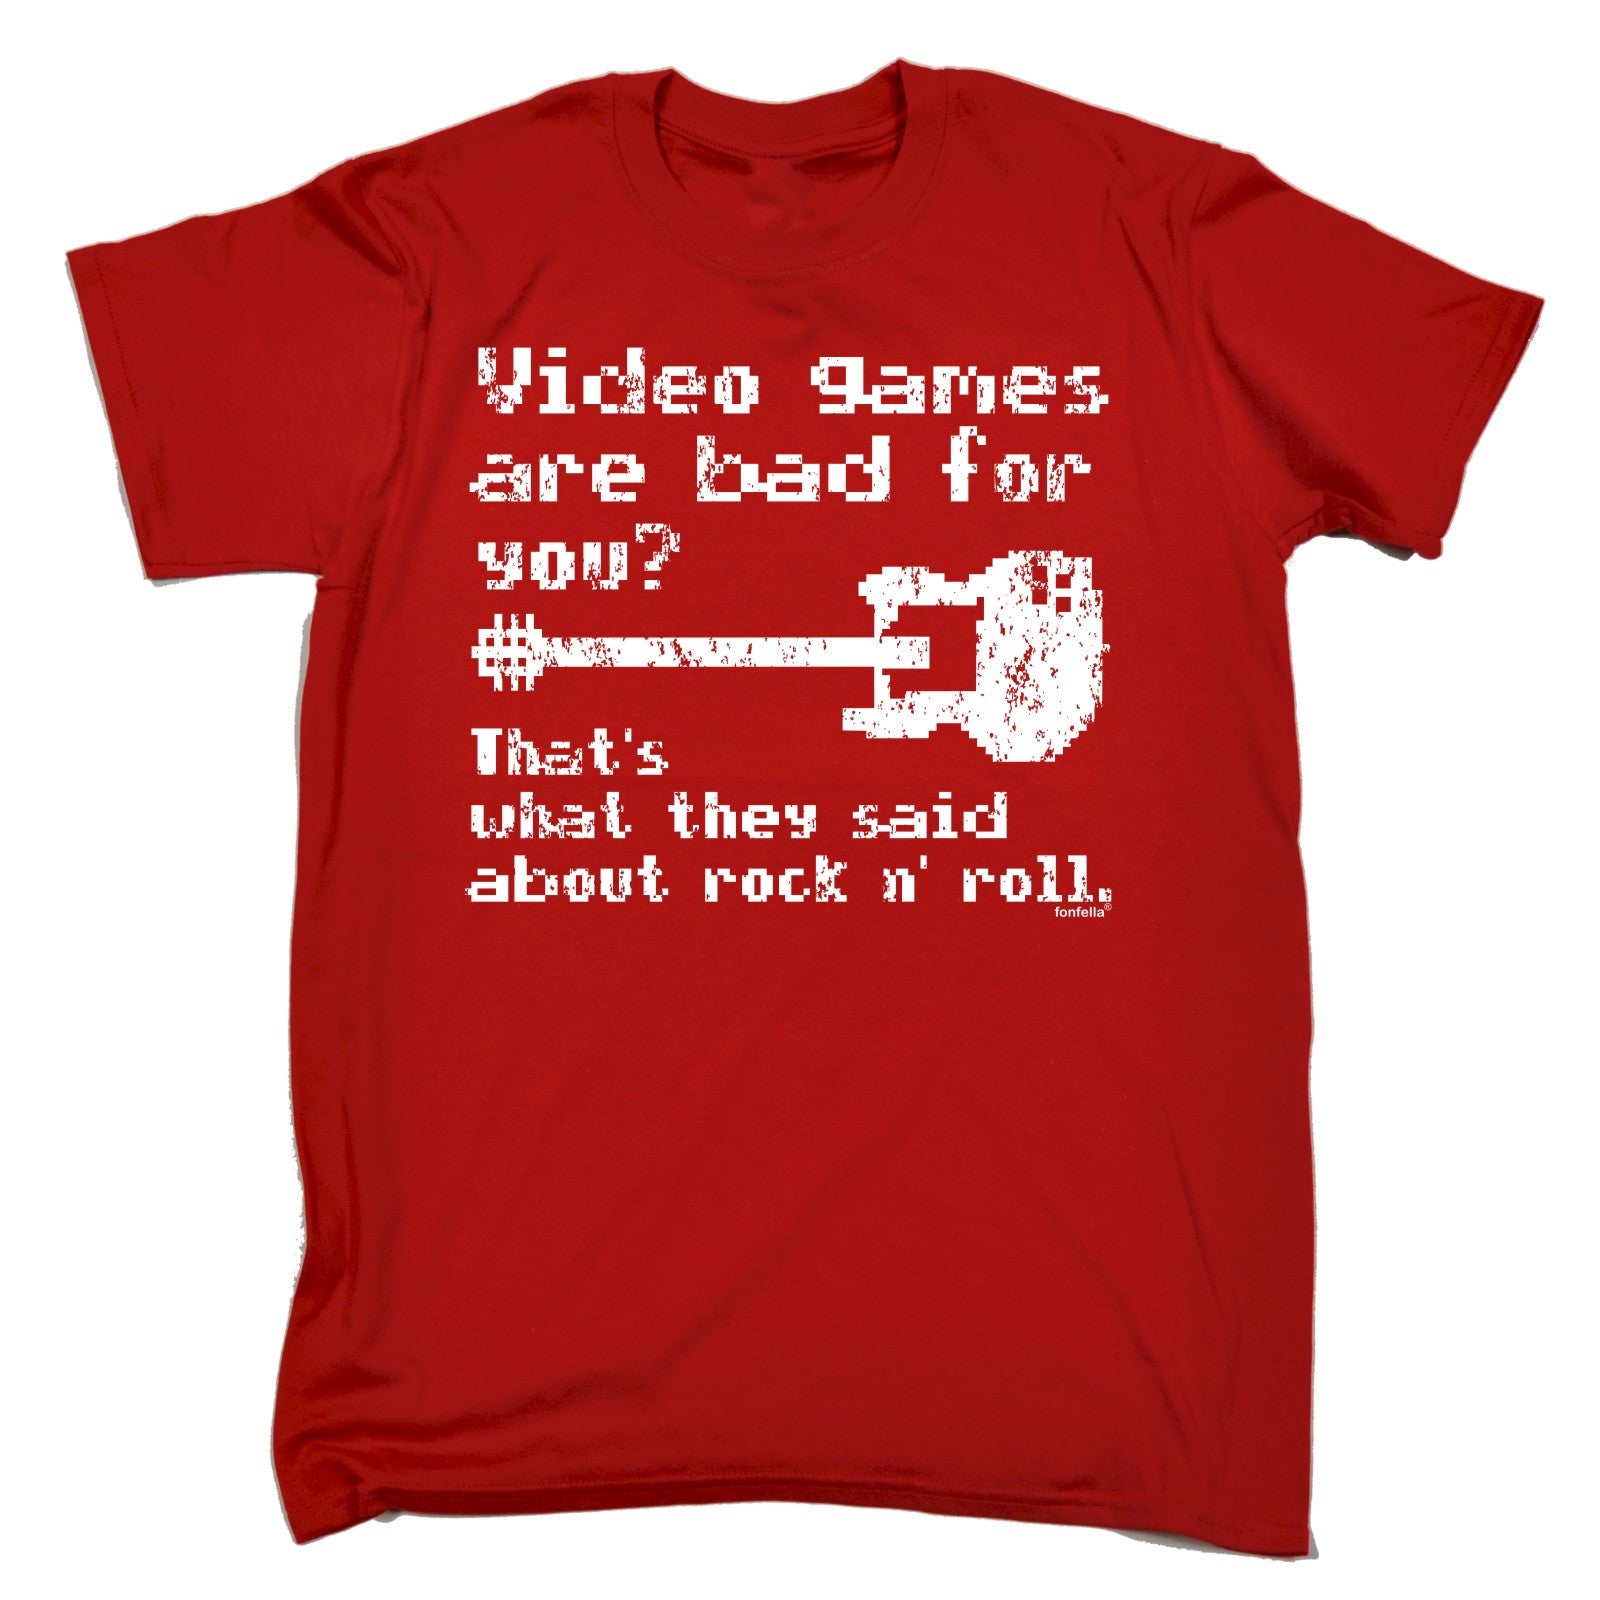 Papa Gamer Cadeau Gaming Vintage Jeux Vidéo Geek' T-shirt Homme